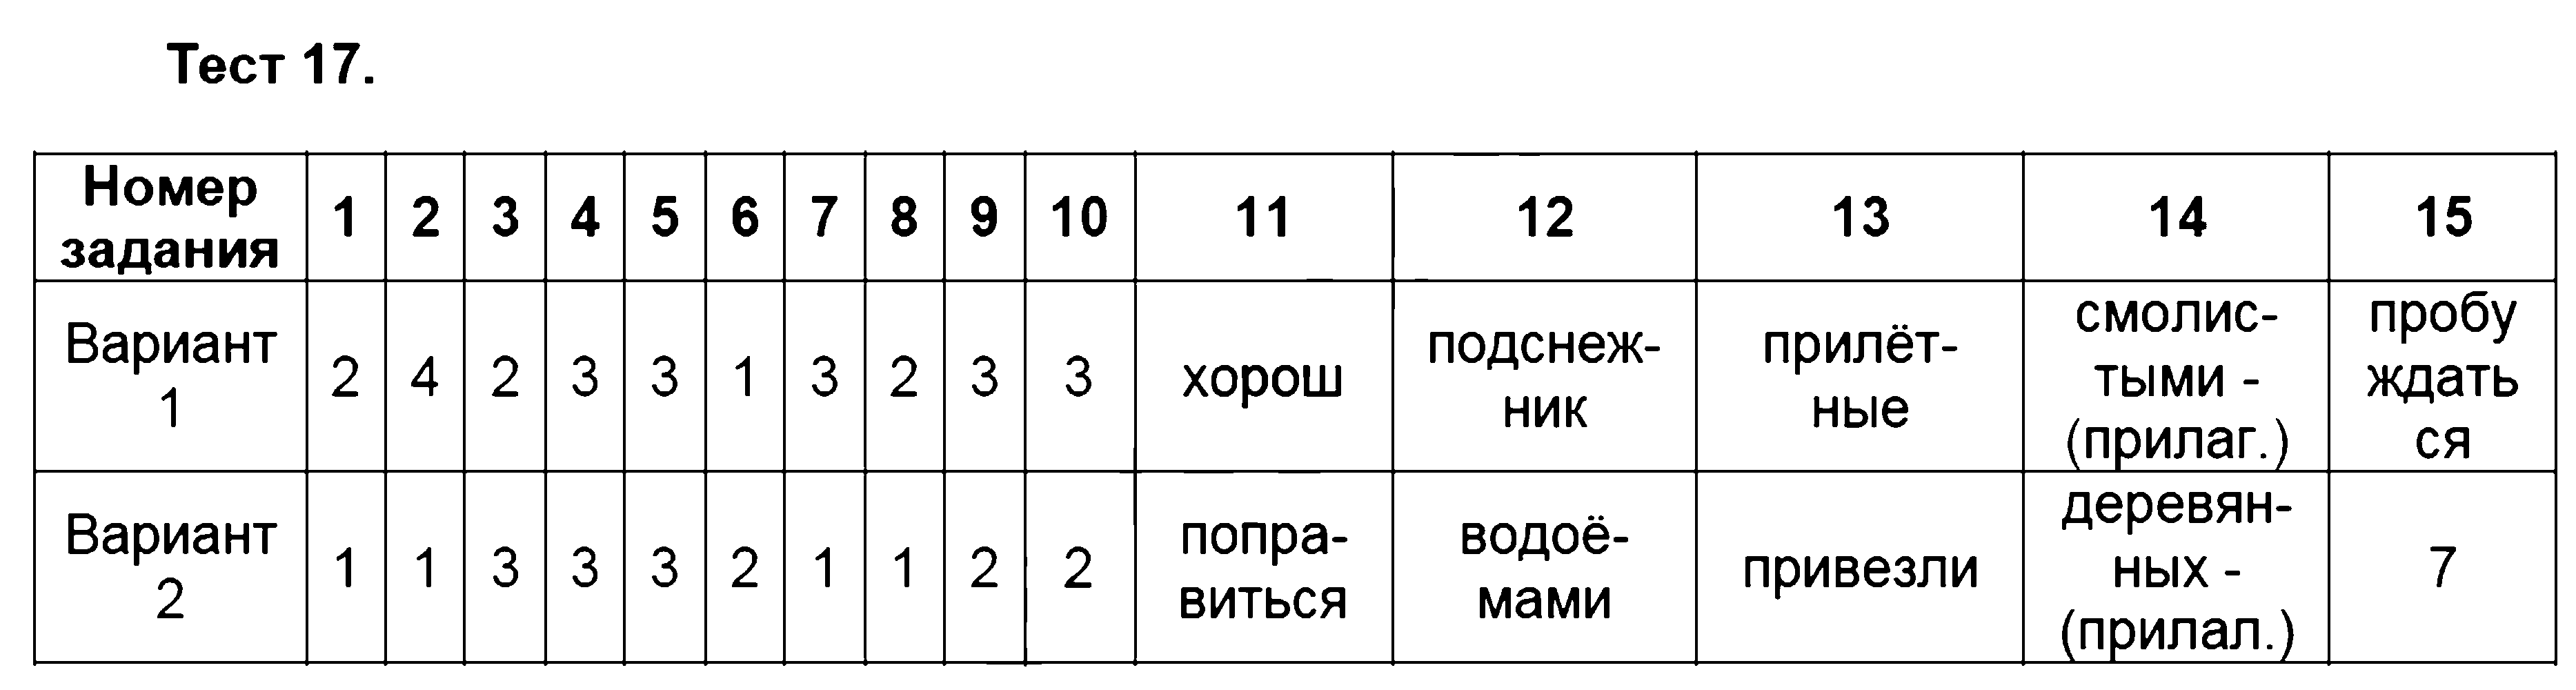 ГДЗ Русский язык 6 класс - Тест 17